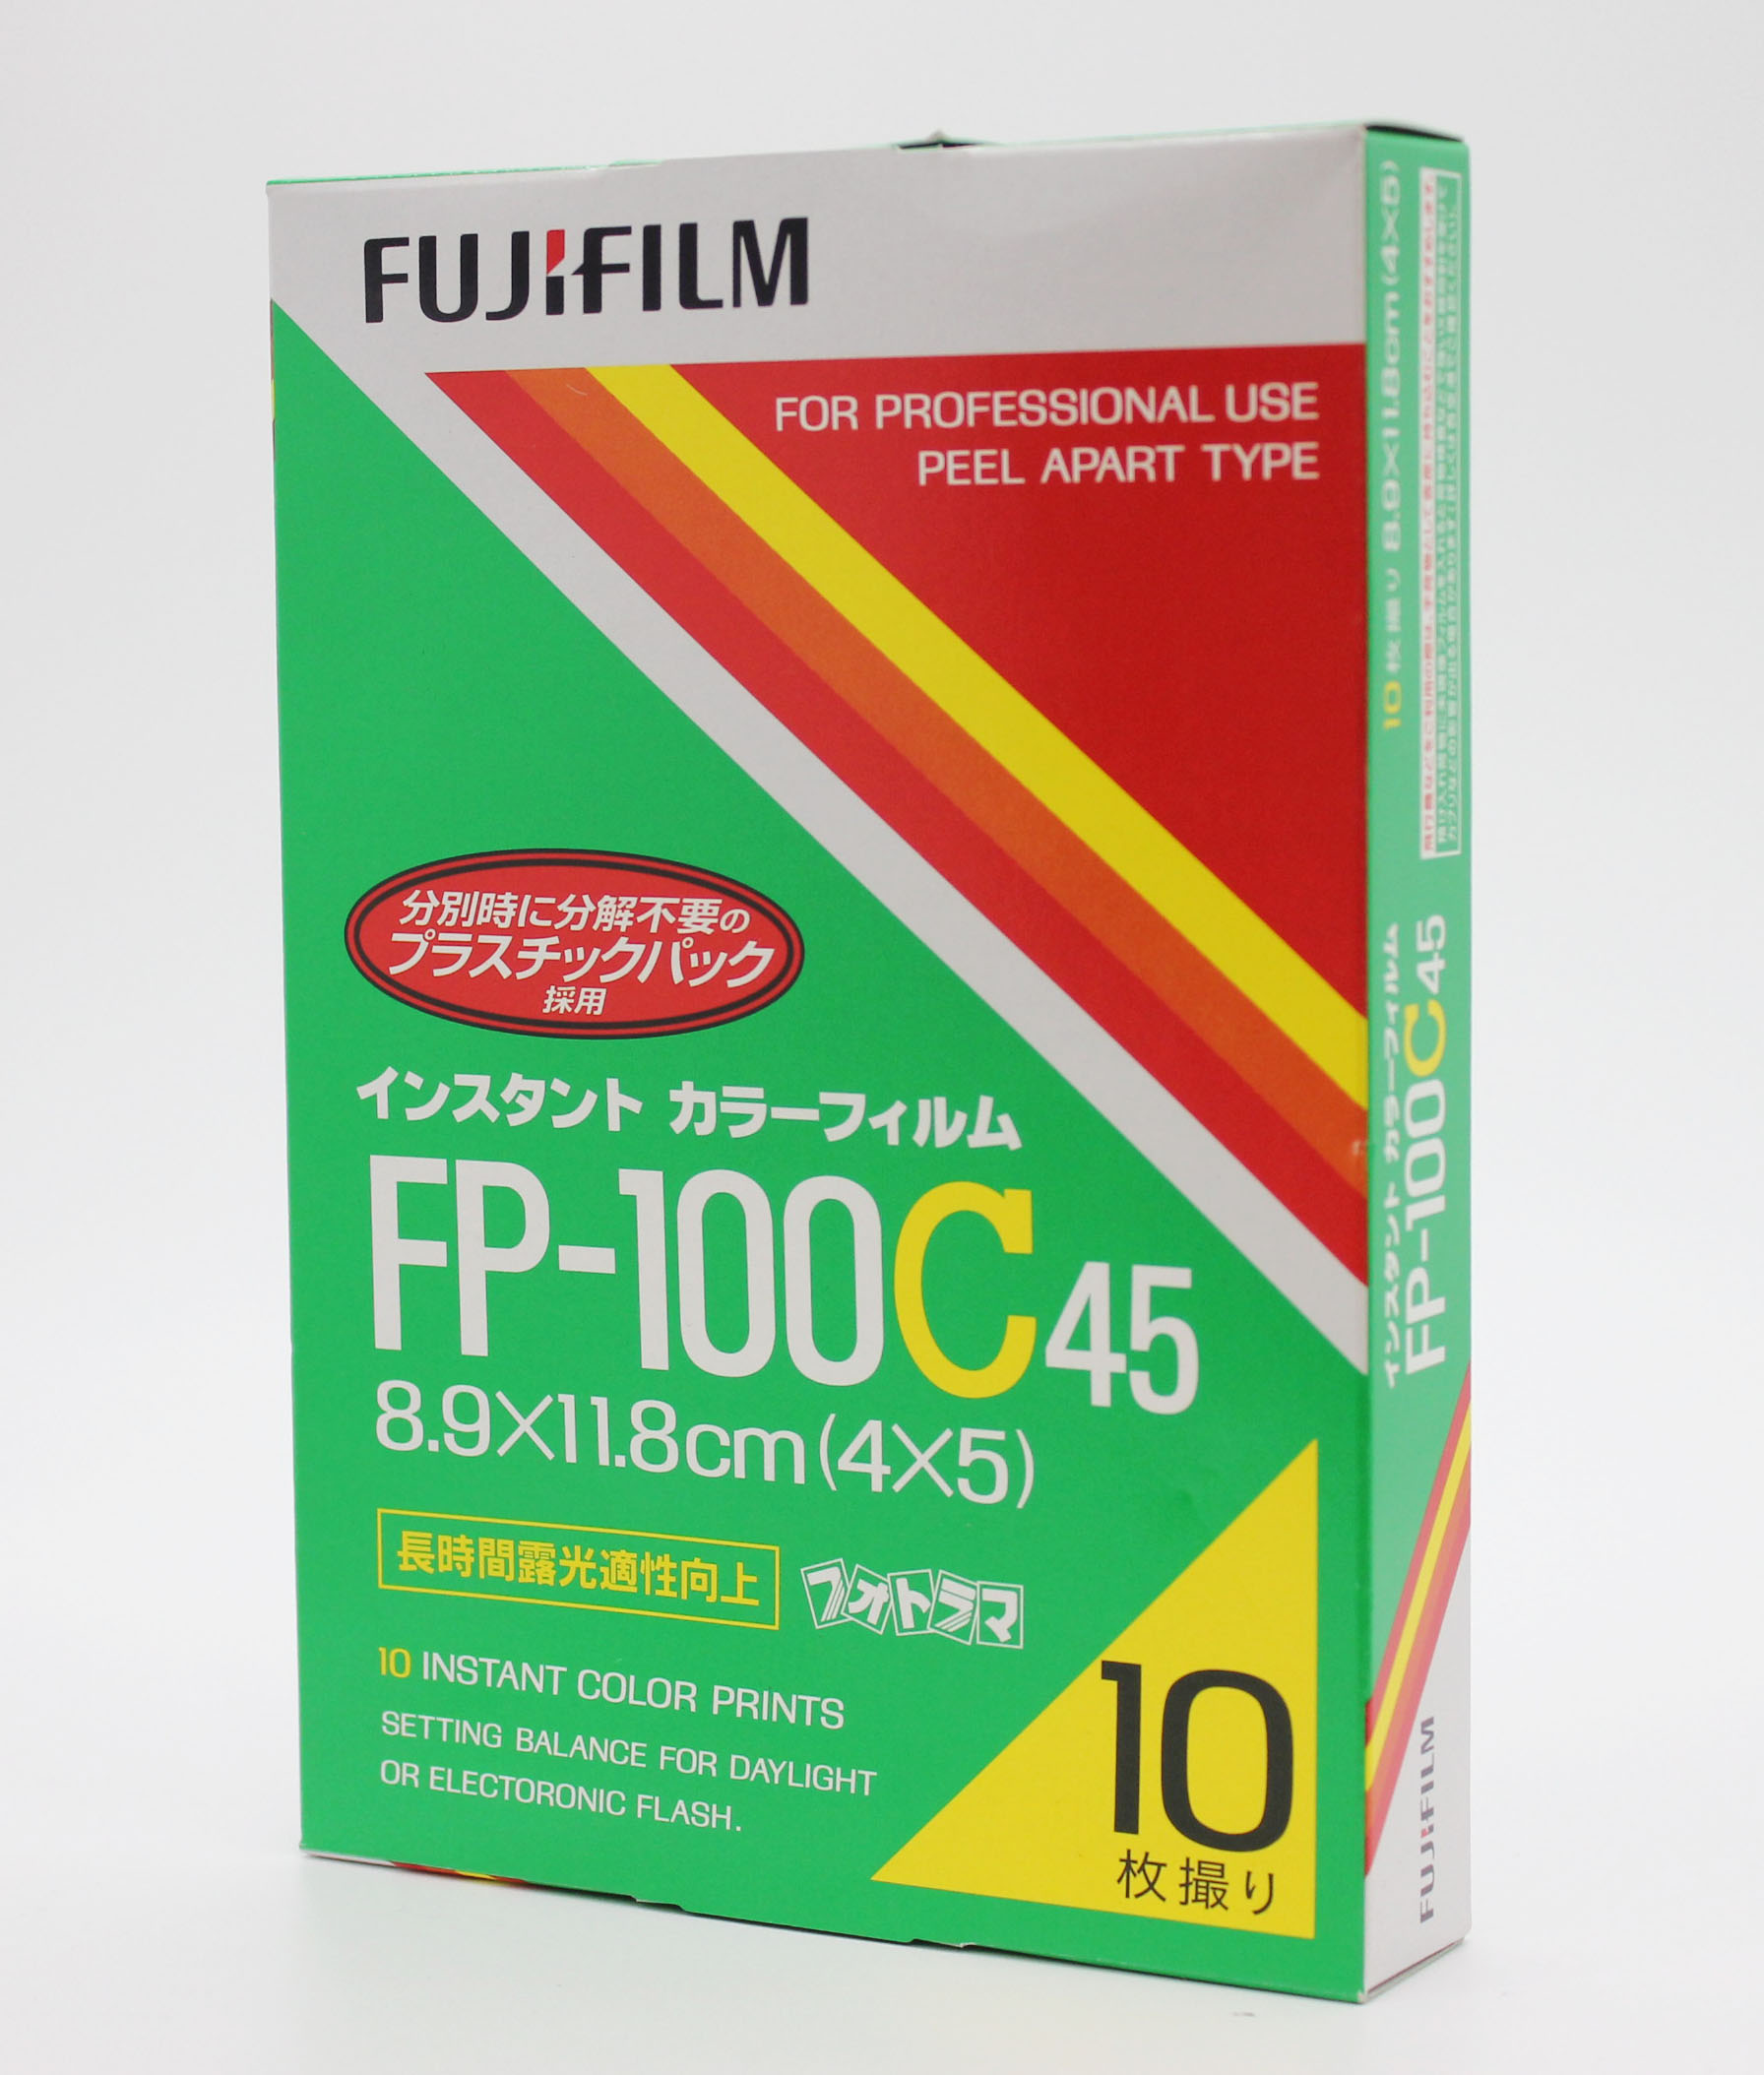 [New] Fuji Fujifilm FP-100C45 4x5 8.9x11.8cm Instant Color Film (EXP 10/2009)